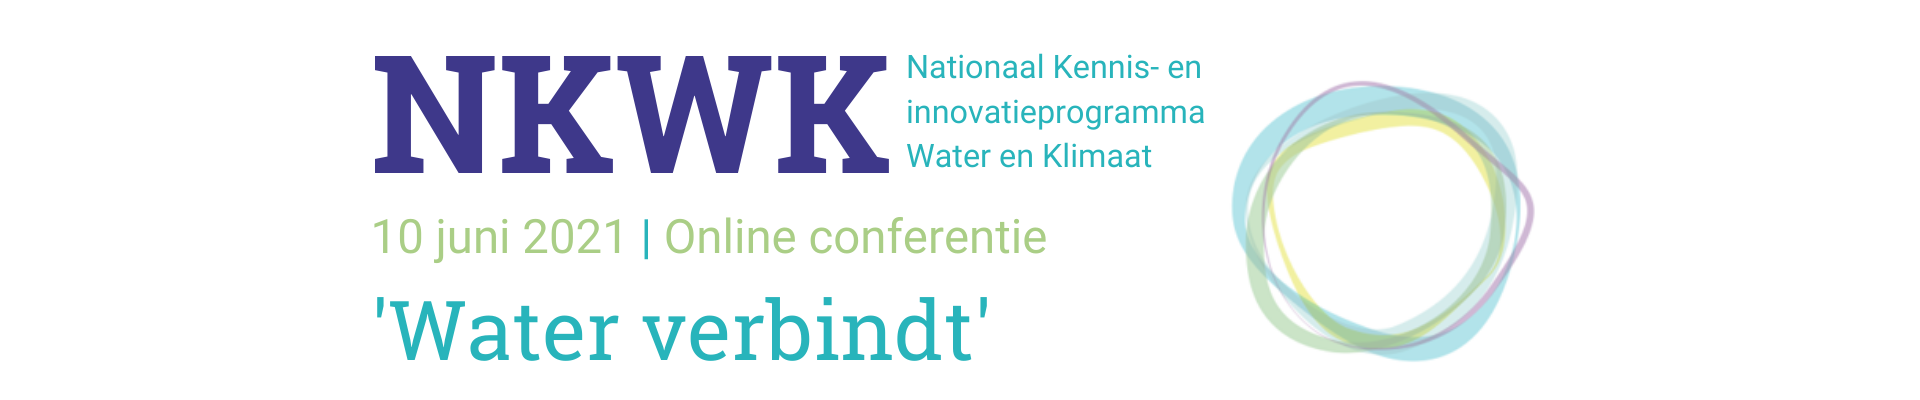 NKWK Conferentie 2021